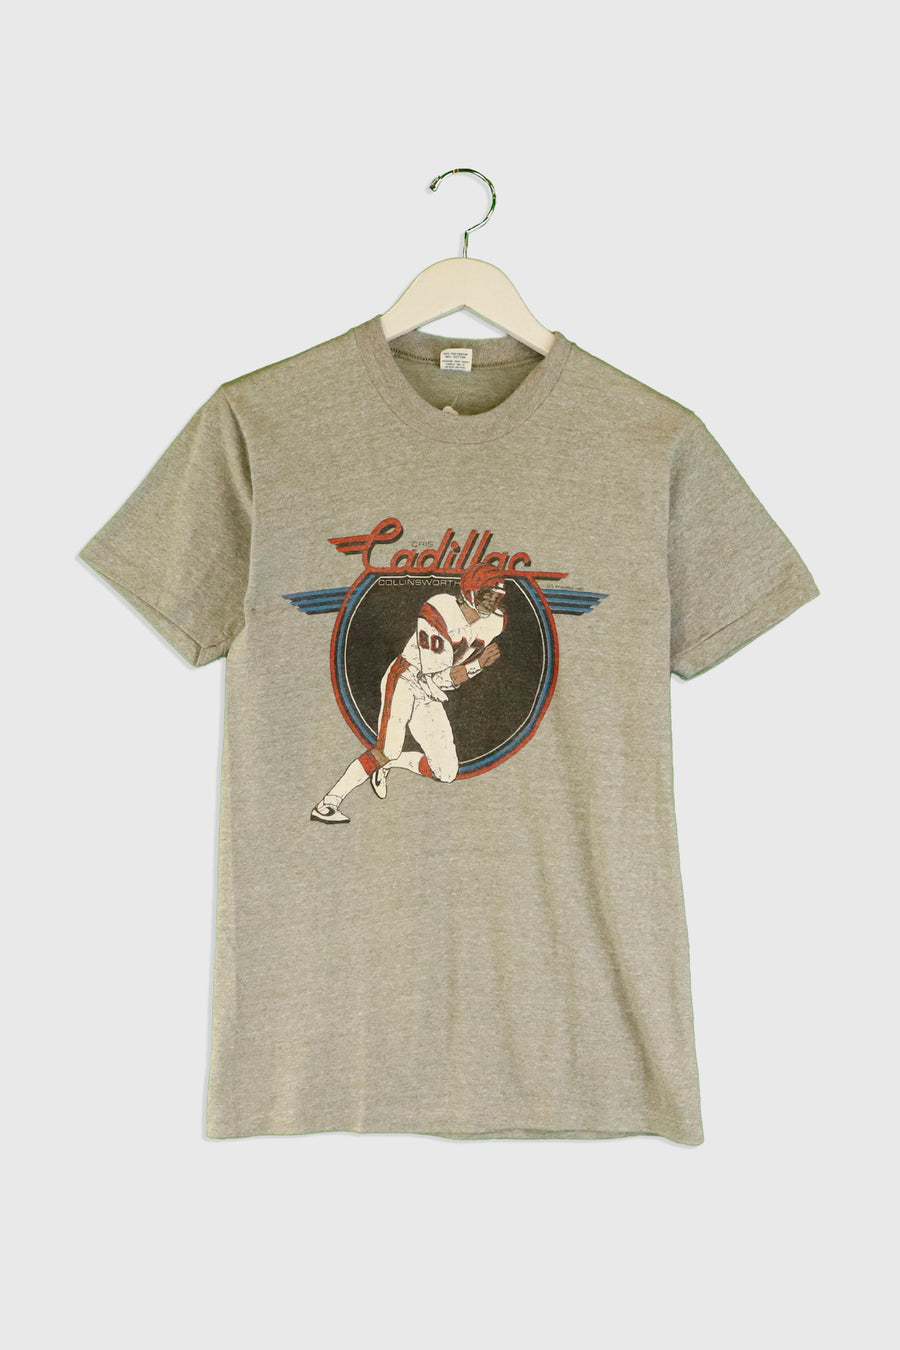 Vintage 1982 Chris Cadillac Collinsworth Football Player Graphic T Shirt Sz M